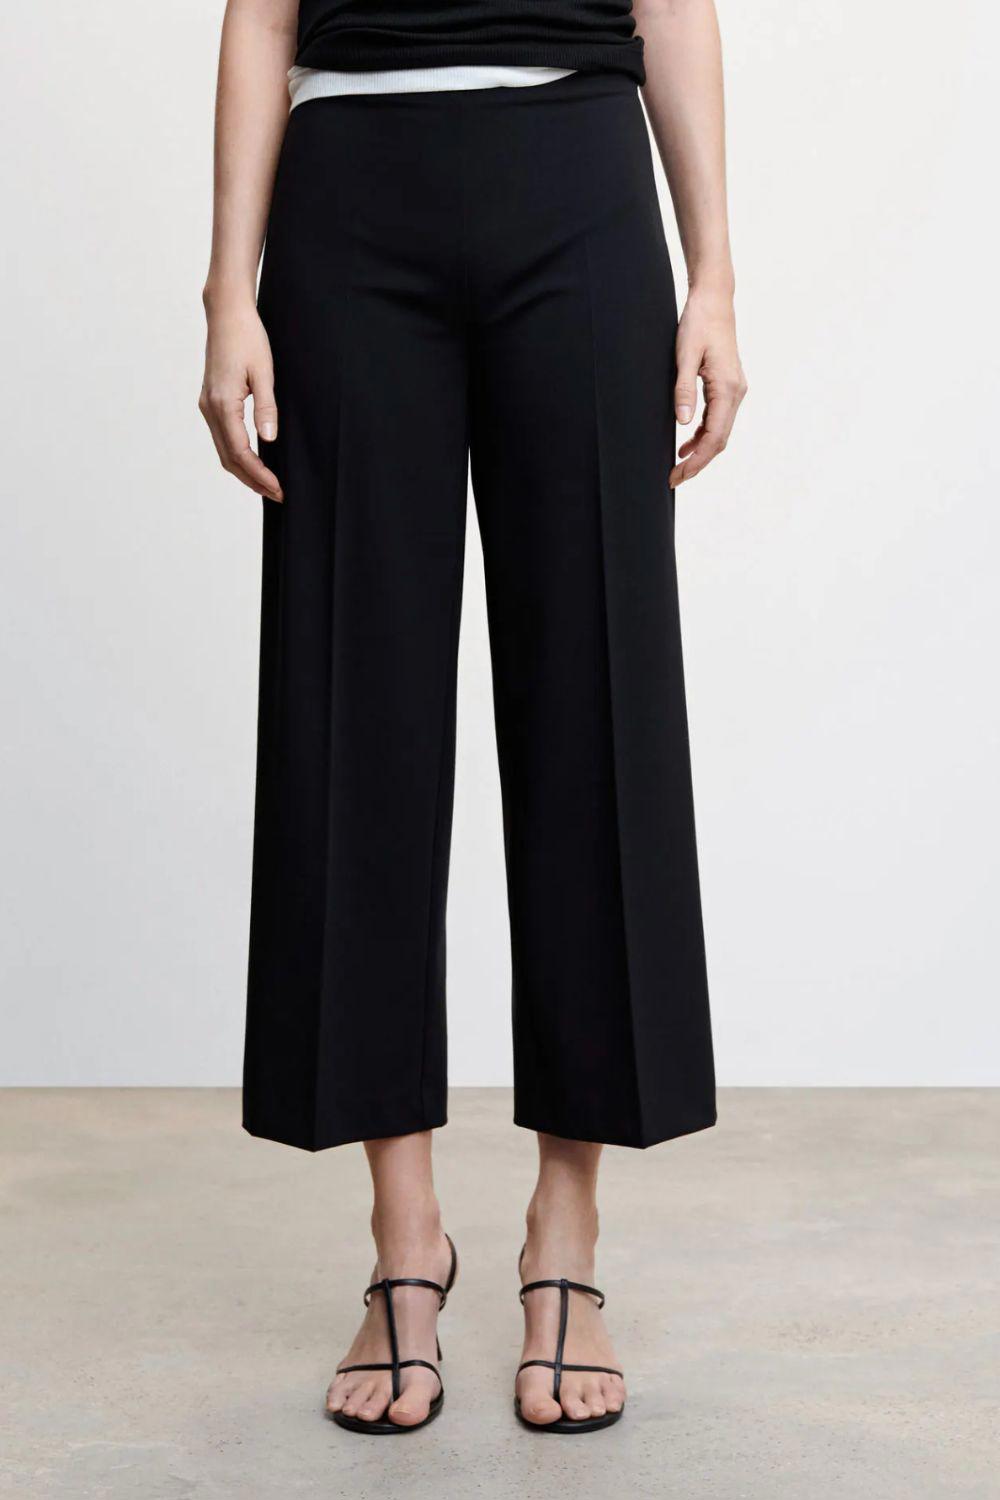 pantalones culotte negros 2